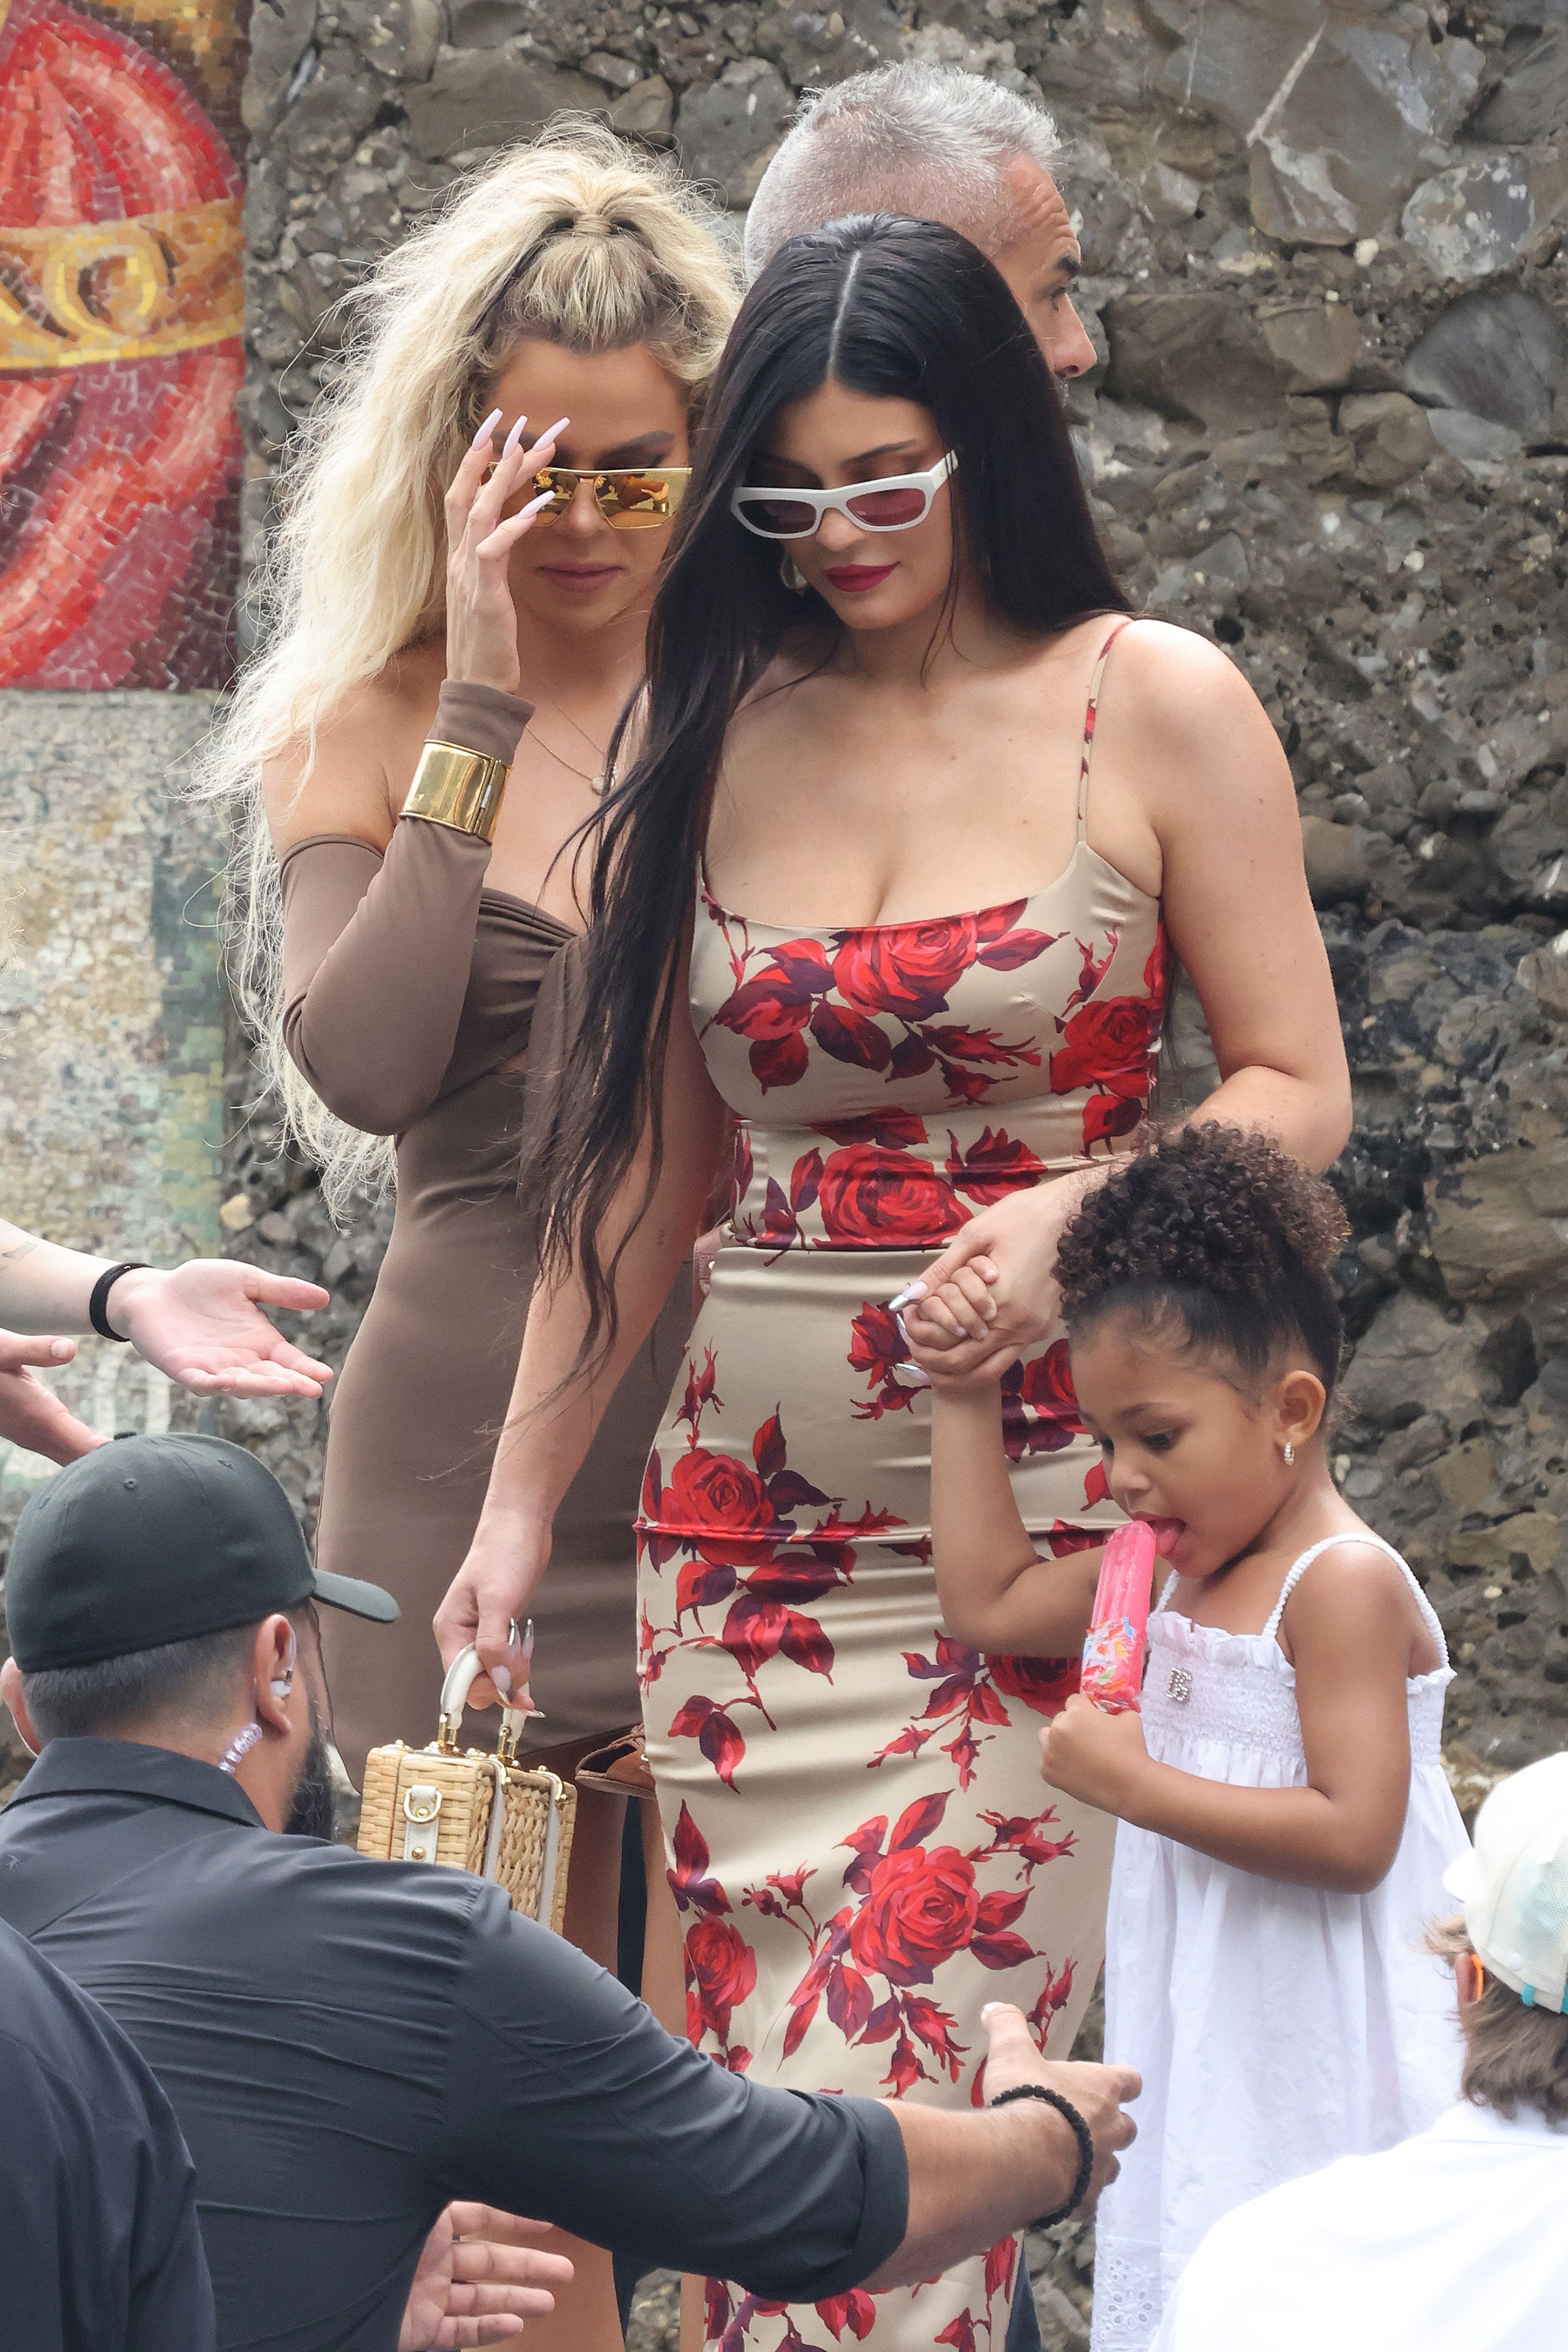 Kylie Jenner Wears Sexy Bodycon Floral Dress During Kourtney’s Wedding Weekend